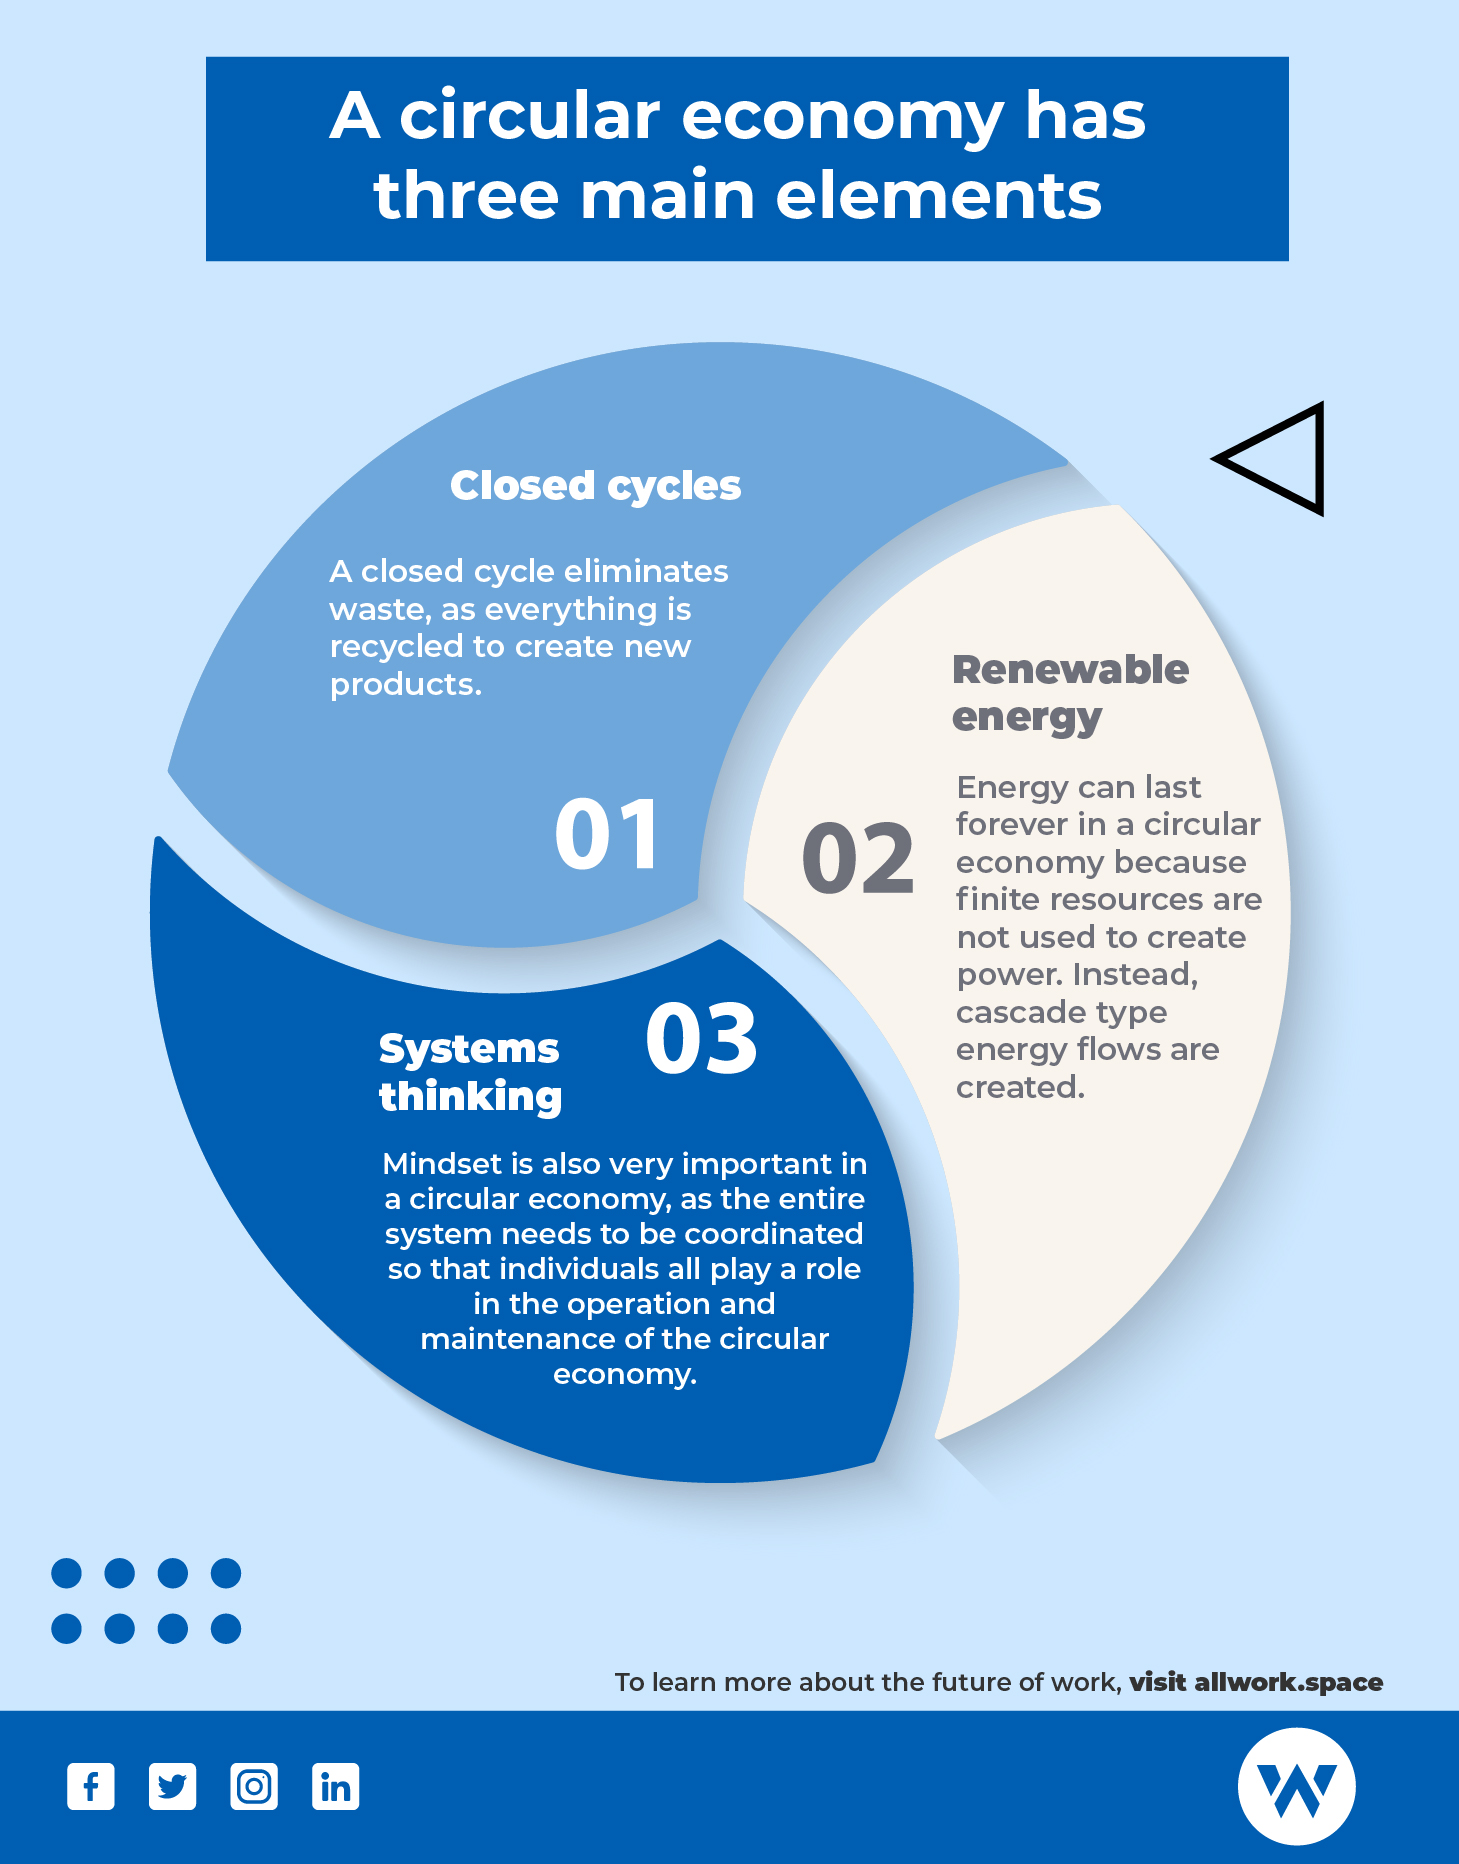 A circular economy has three main elements